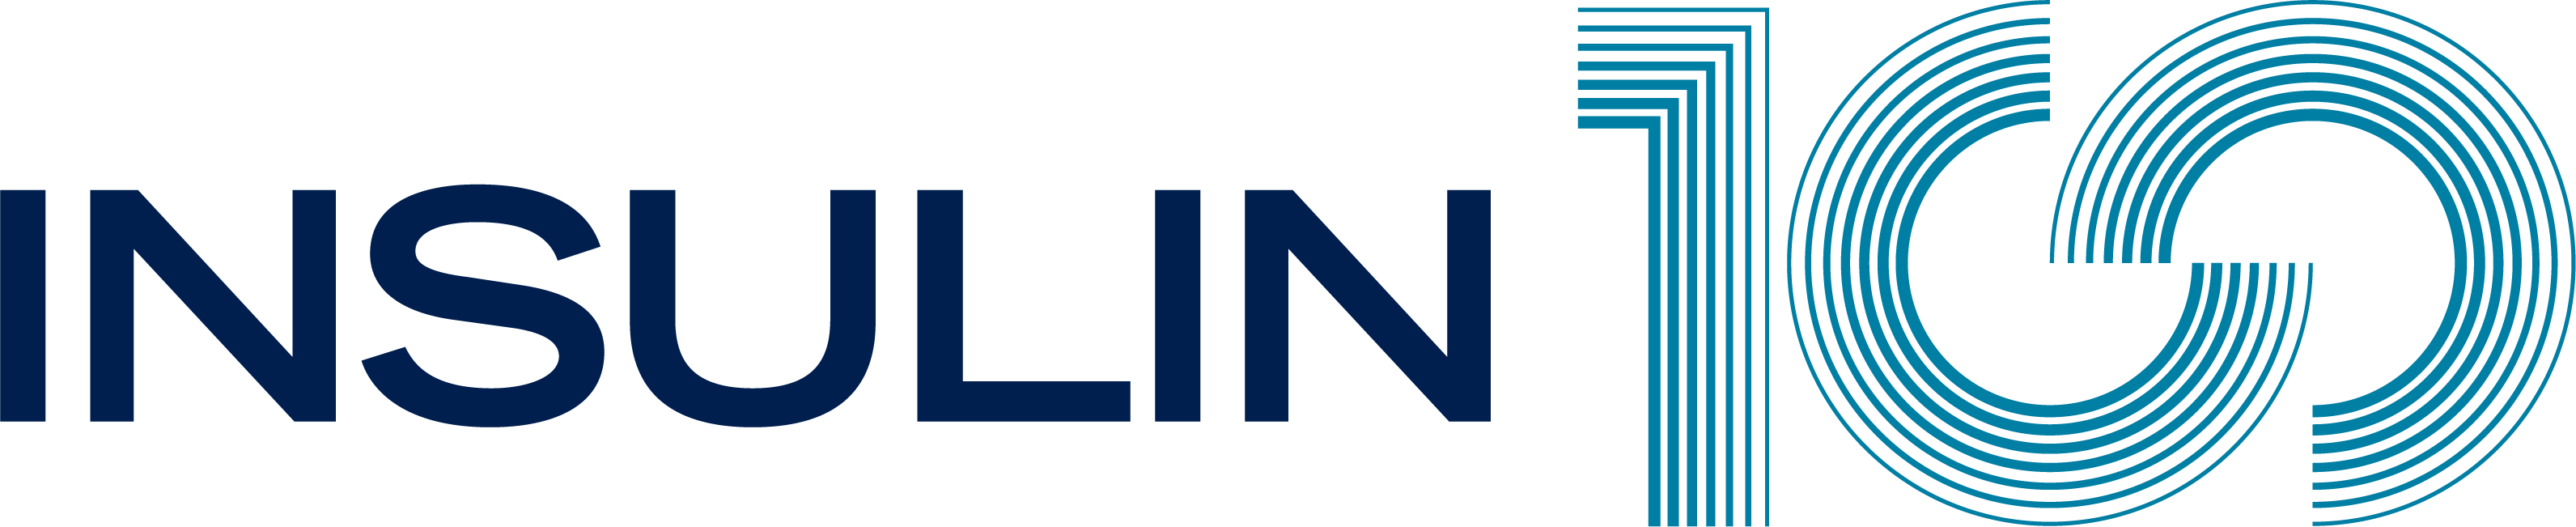 Official Insulin100 logo